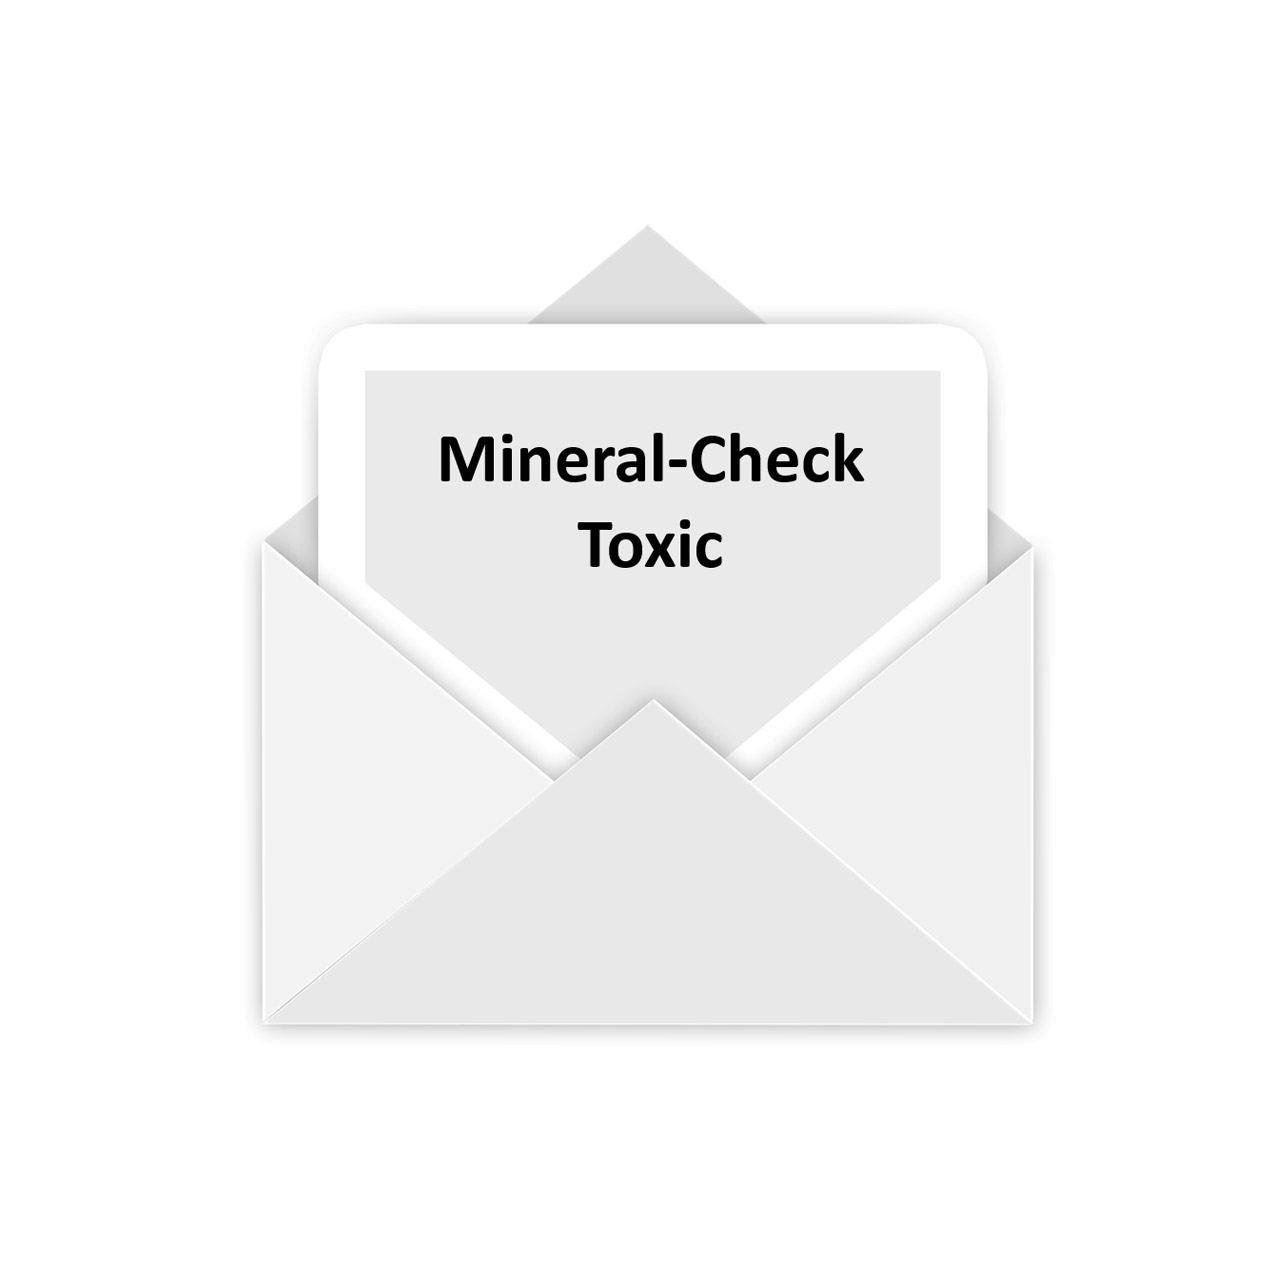 Mineral-Check Toxic